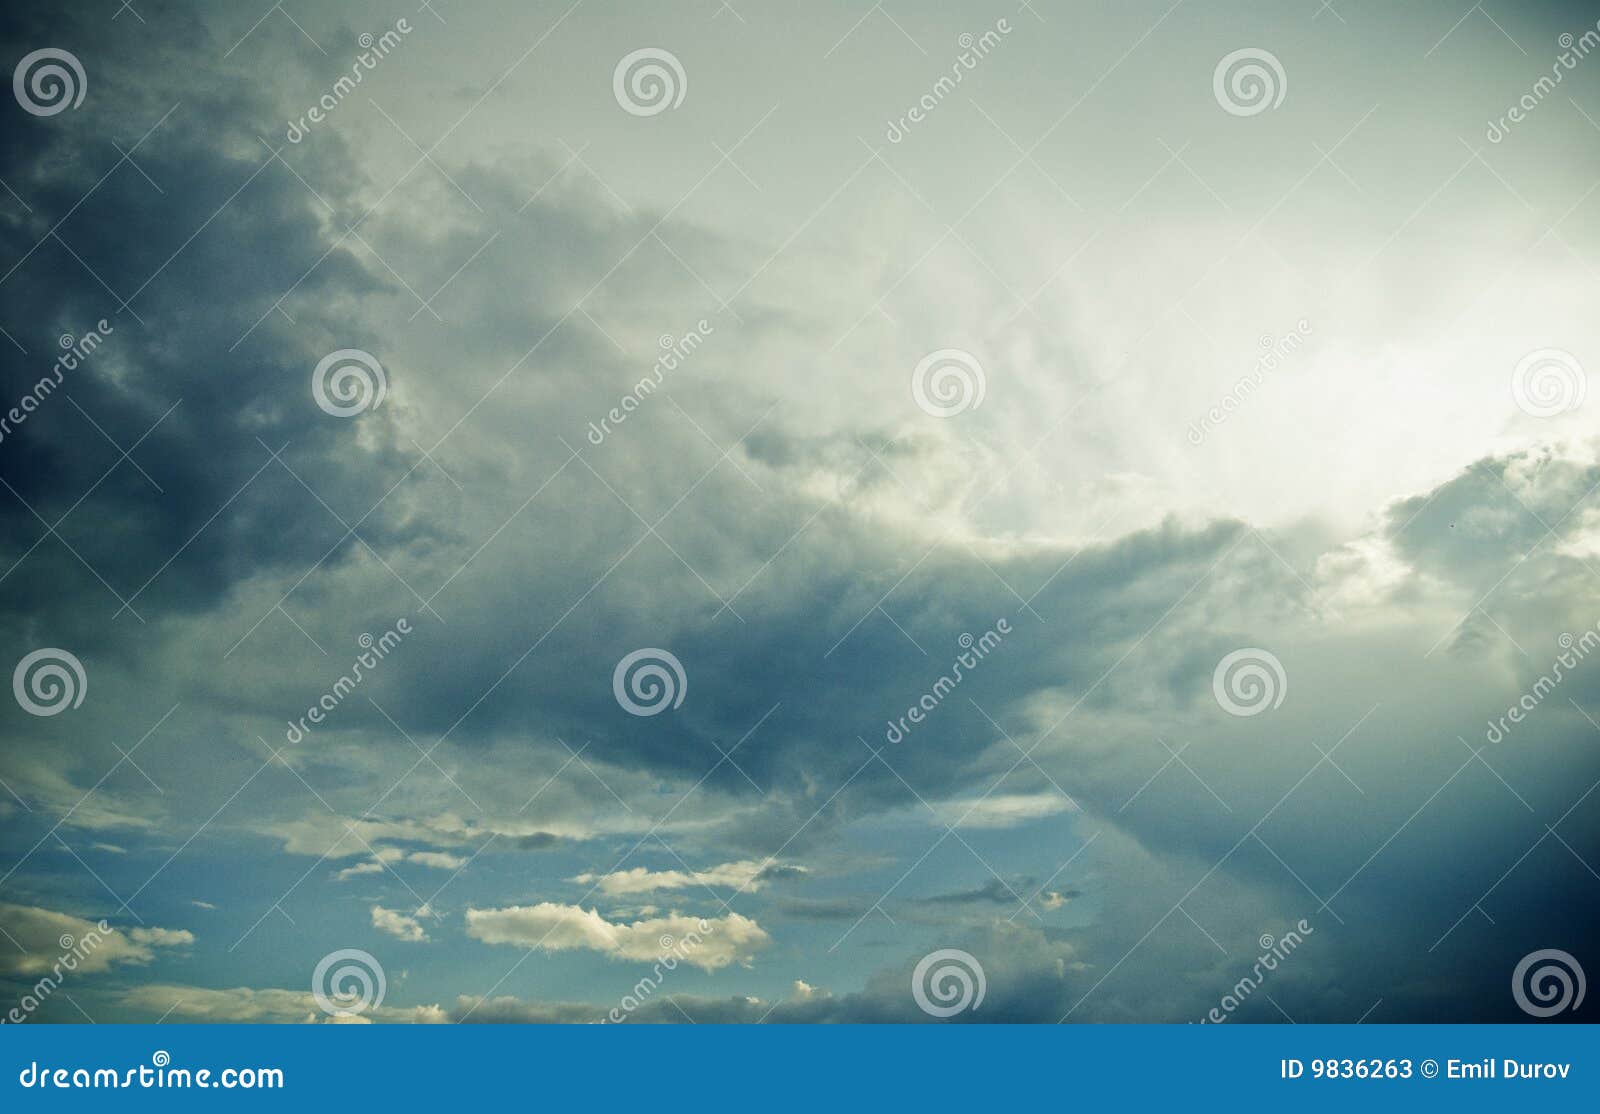 dramatic cloudy sky